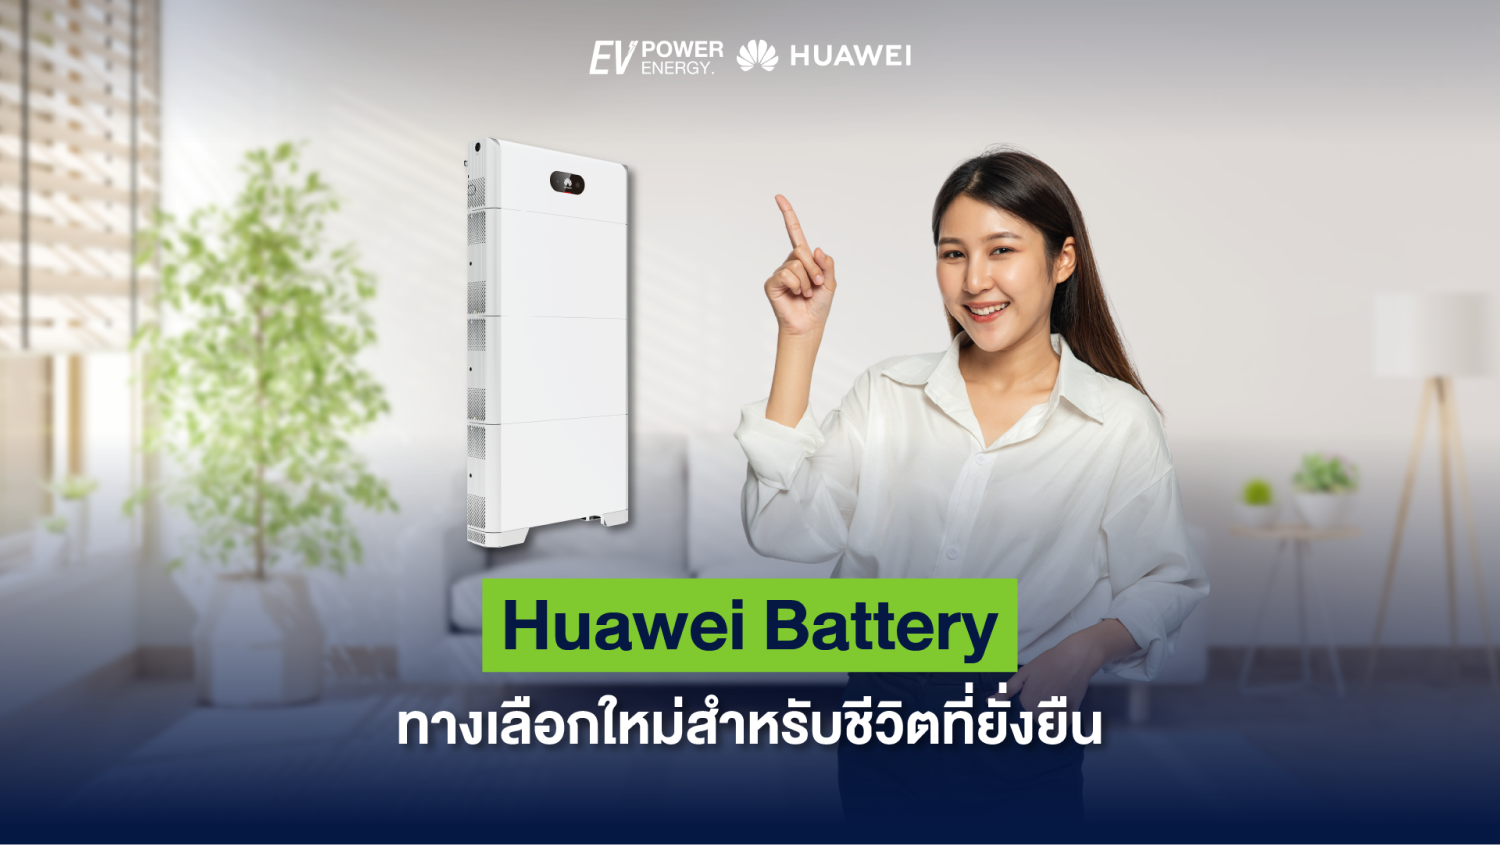 Huawei Battery ทางเลือกใหม่สำหรับชีวิตที่ยั่งยืน